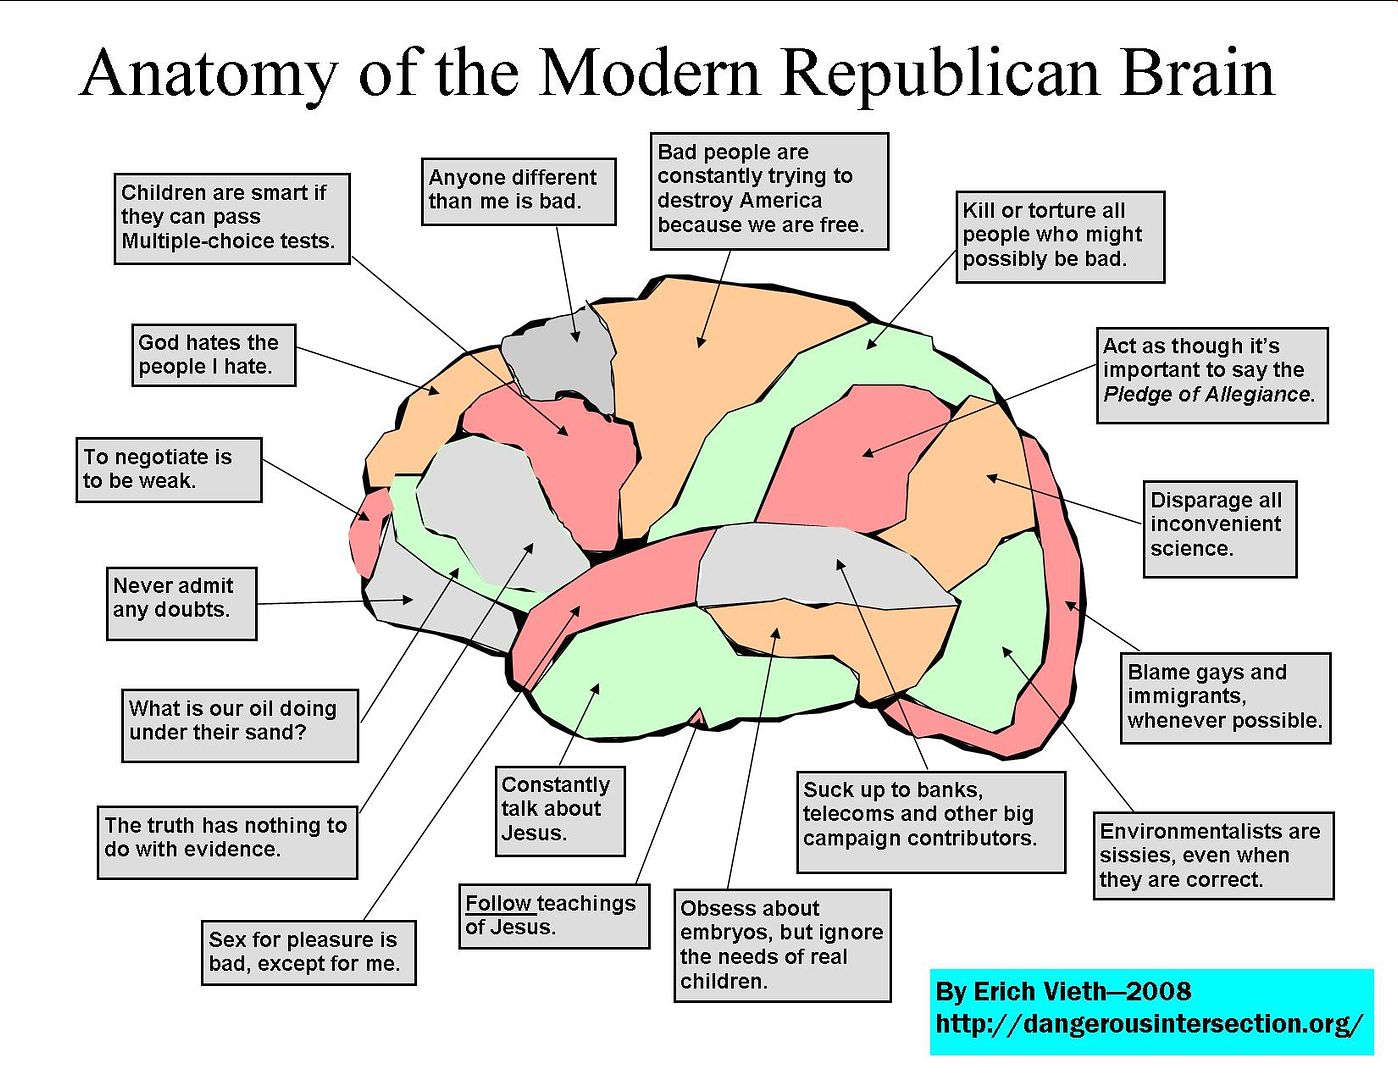 republican-brain-lo-res.jpg picture by djhobby